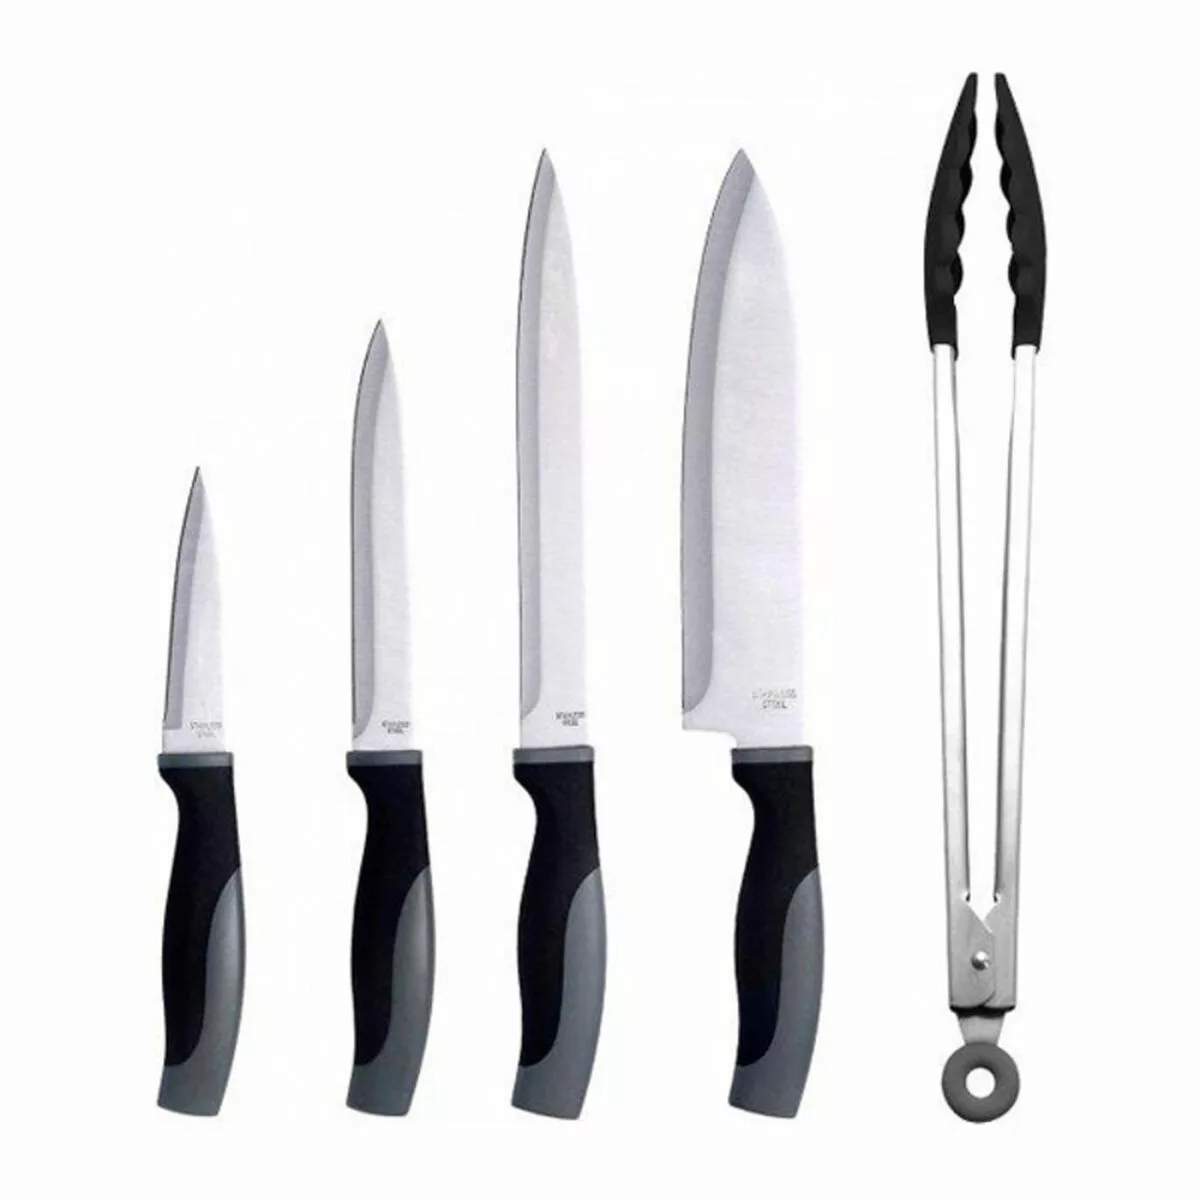 Messerset Bergner Edelstahl (5 Pcs) günstig online kaufen